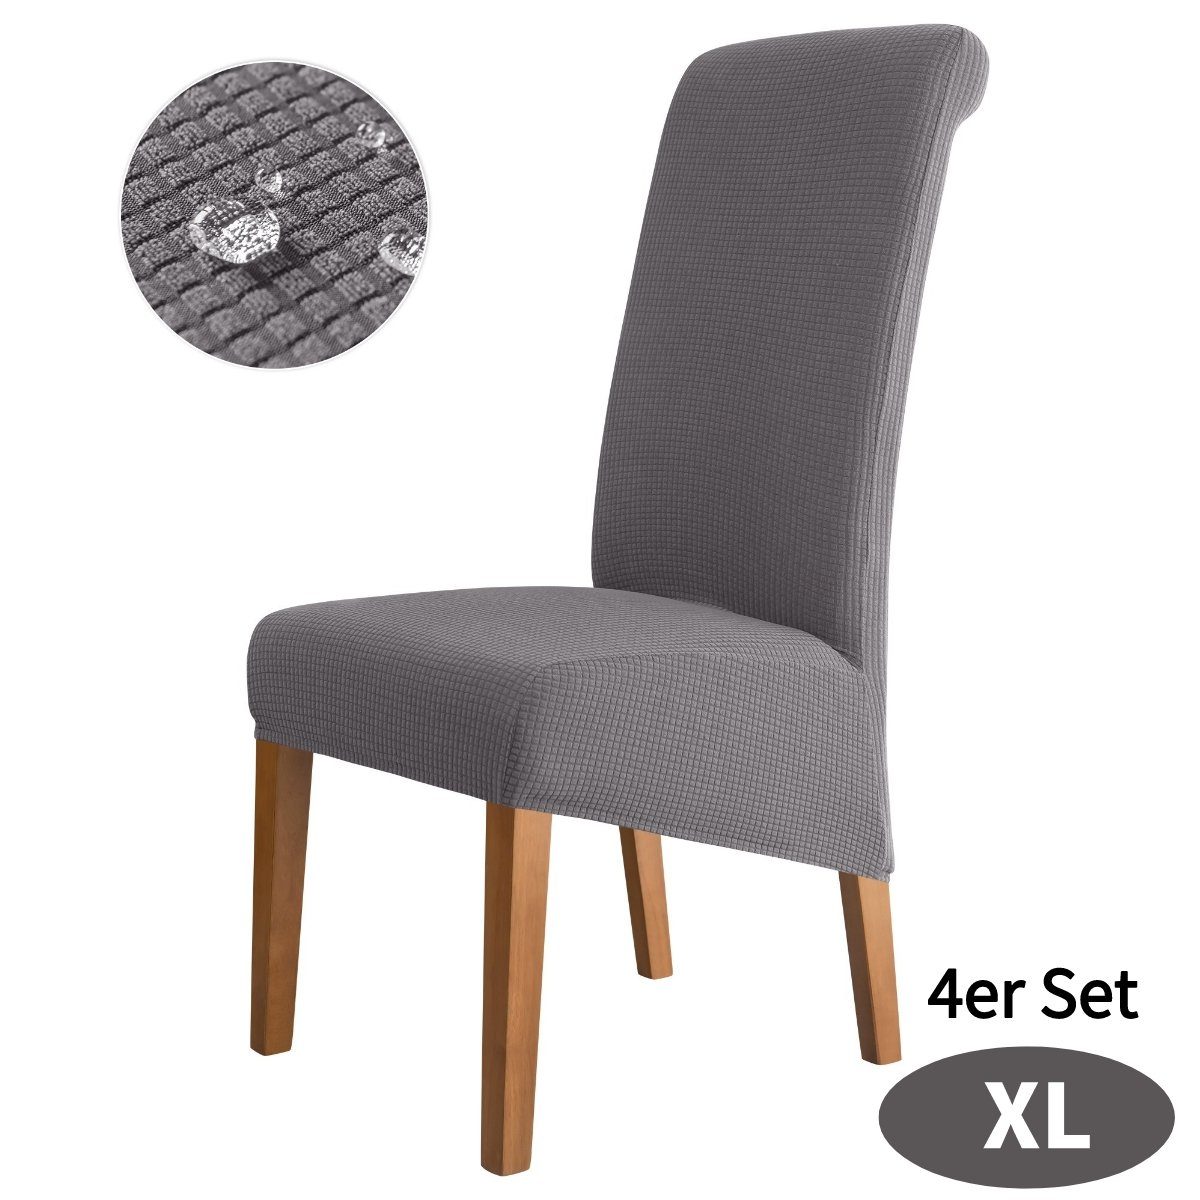 Sitzflächenhusse Universal Stuhlbezug Stretch Stuhl hussen Hochwertiger Stretchstoff, 7Magic, Stretch-Stuhlhussen, abnehmbar, waschbar,4er-set Dunkelgrau|XL